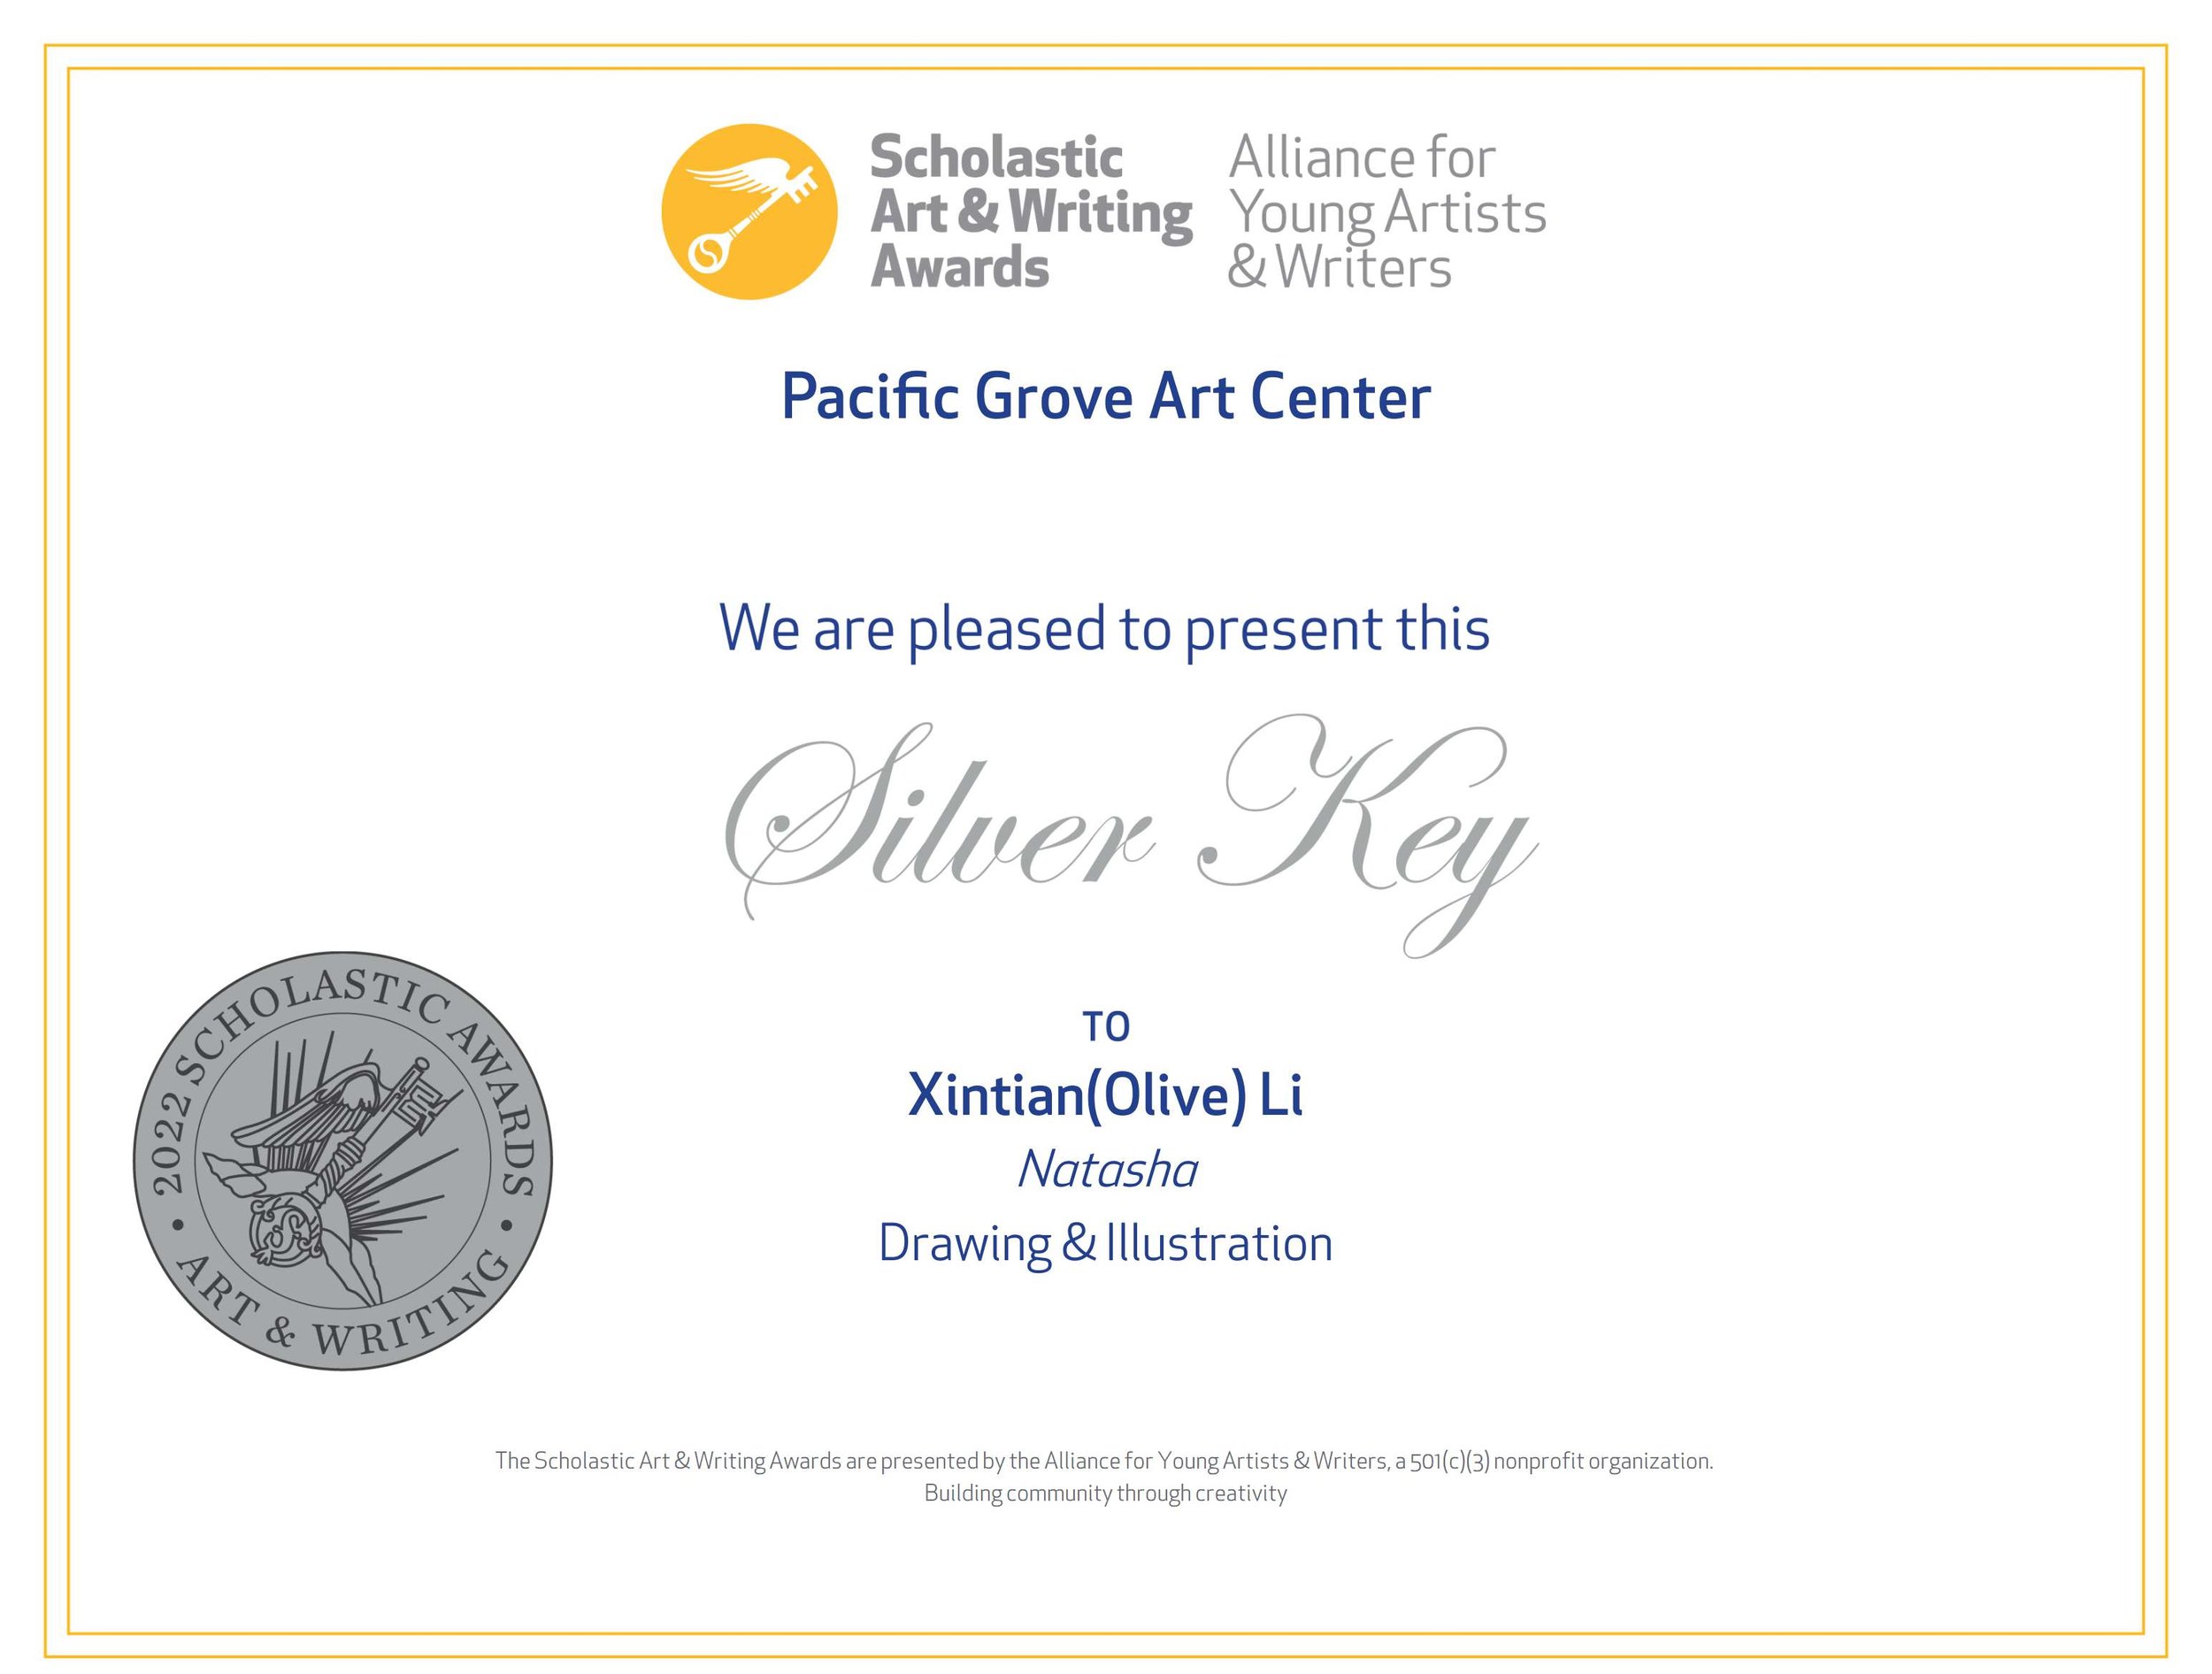 award_certificate_work_14200413_Silver_Key_Li_Xintian(Olive).jpeg